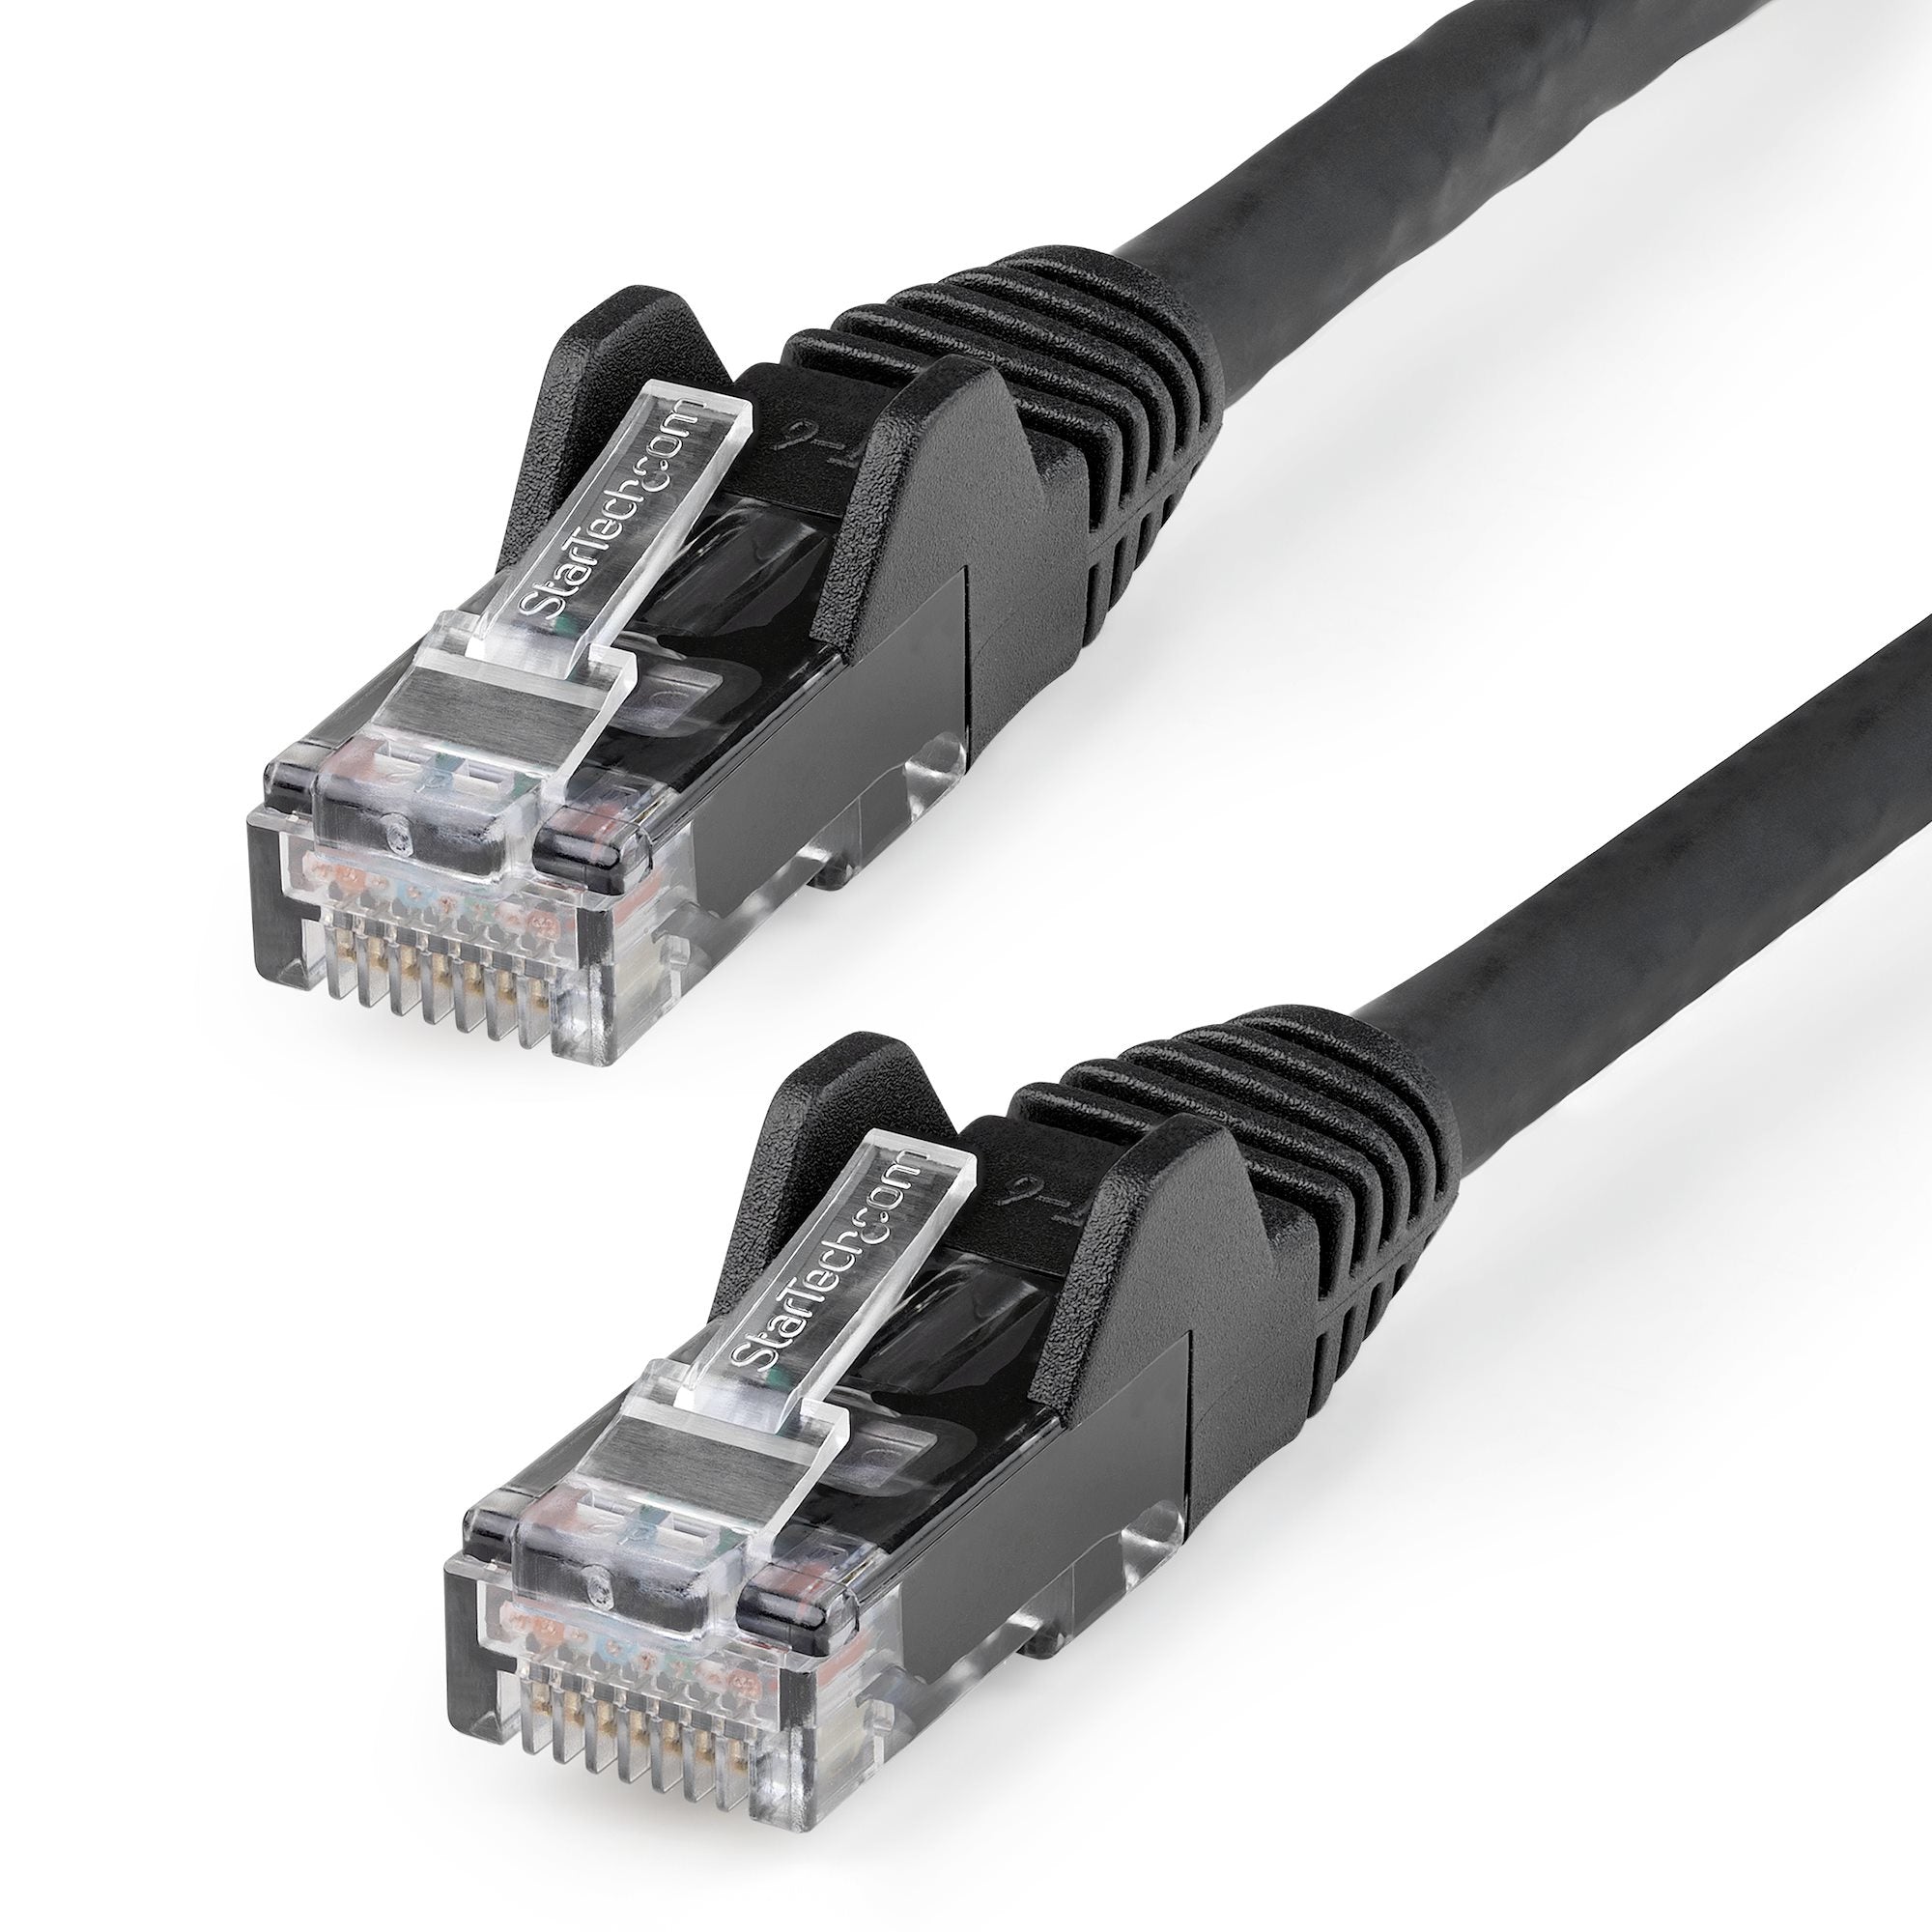 StarTech.com 1m CAT6 Ethernet Cable - LSZH (Low Smoke Zero Halogen) - 10 Gigabit 650MHz 100W PoE RJ45 10GbE UTP Network Patch Cord Snagless with Strain Relief - Black, CAT 6, ETL Verified, 24AWG